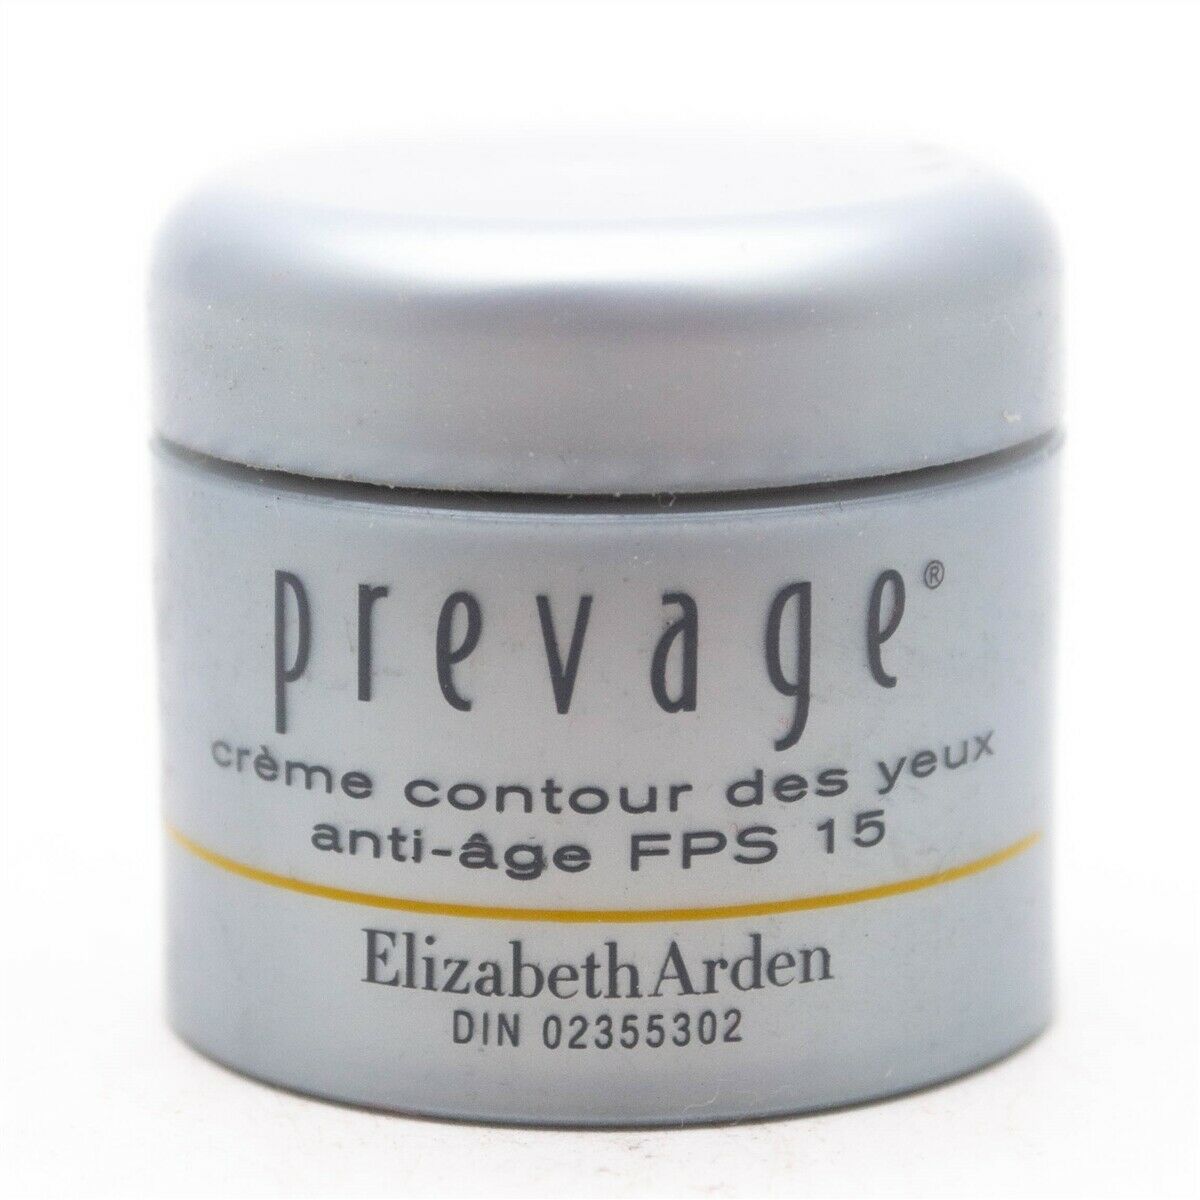 Elizabeth Arden Prevage Anti-aging Eye Cream SPF15  5ml  (New-No Box) - $9.49